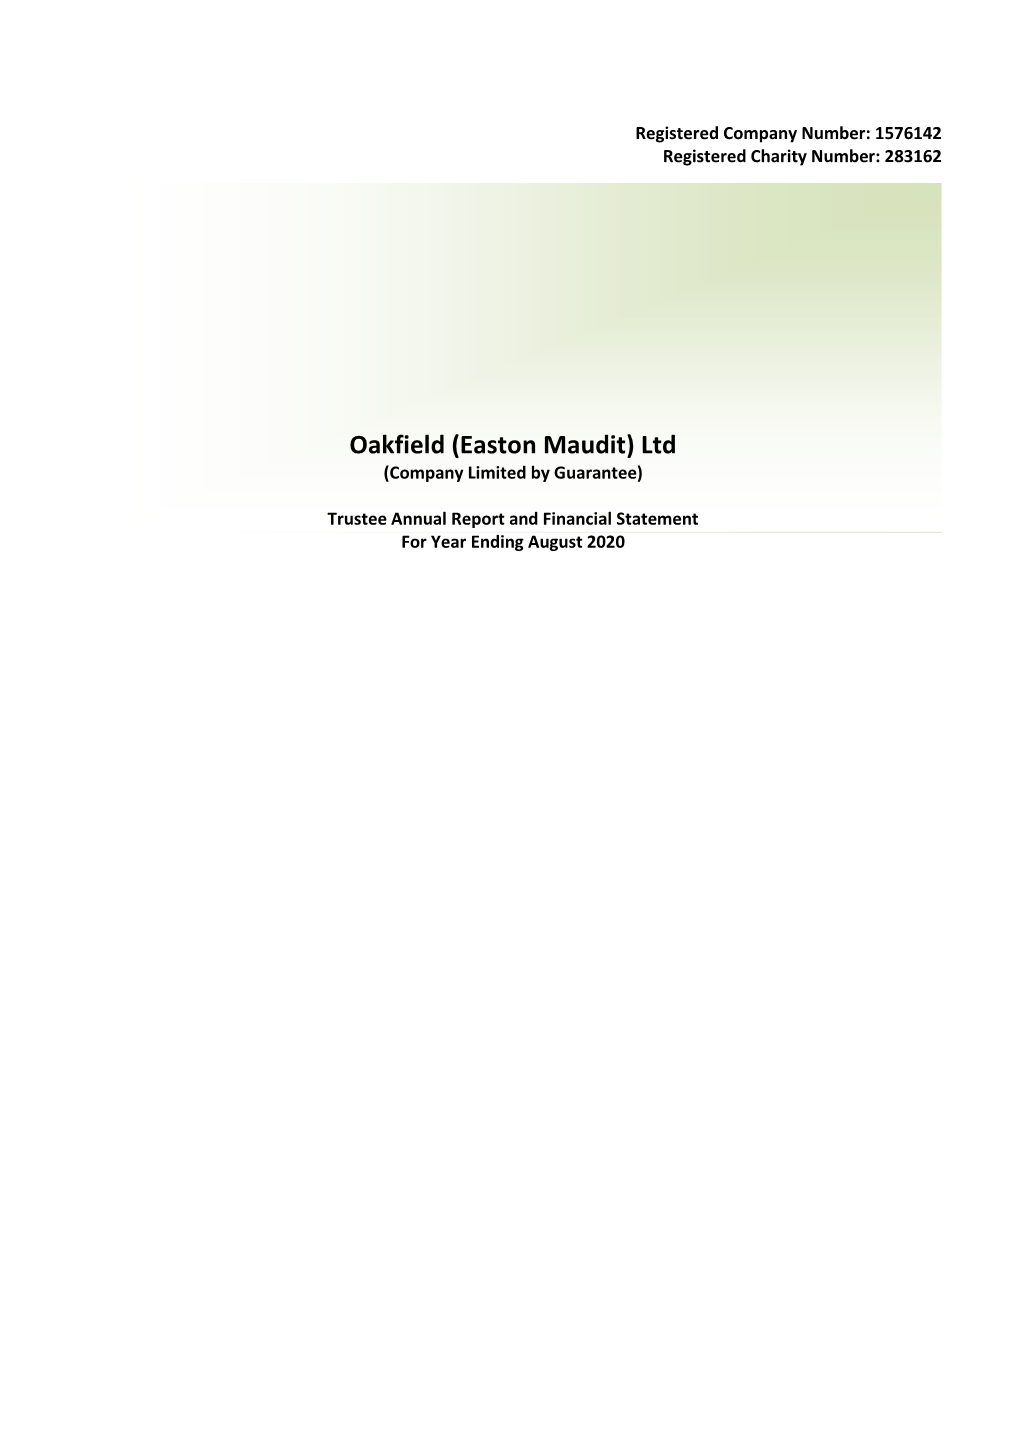 Oakfield (Easton Maudit) Ltd (Company Limited by Guarantee)